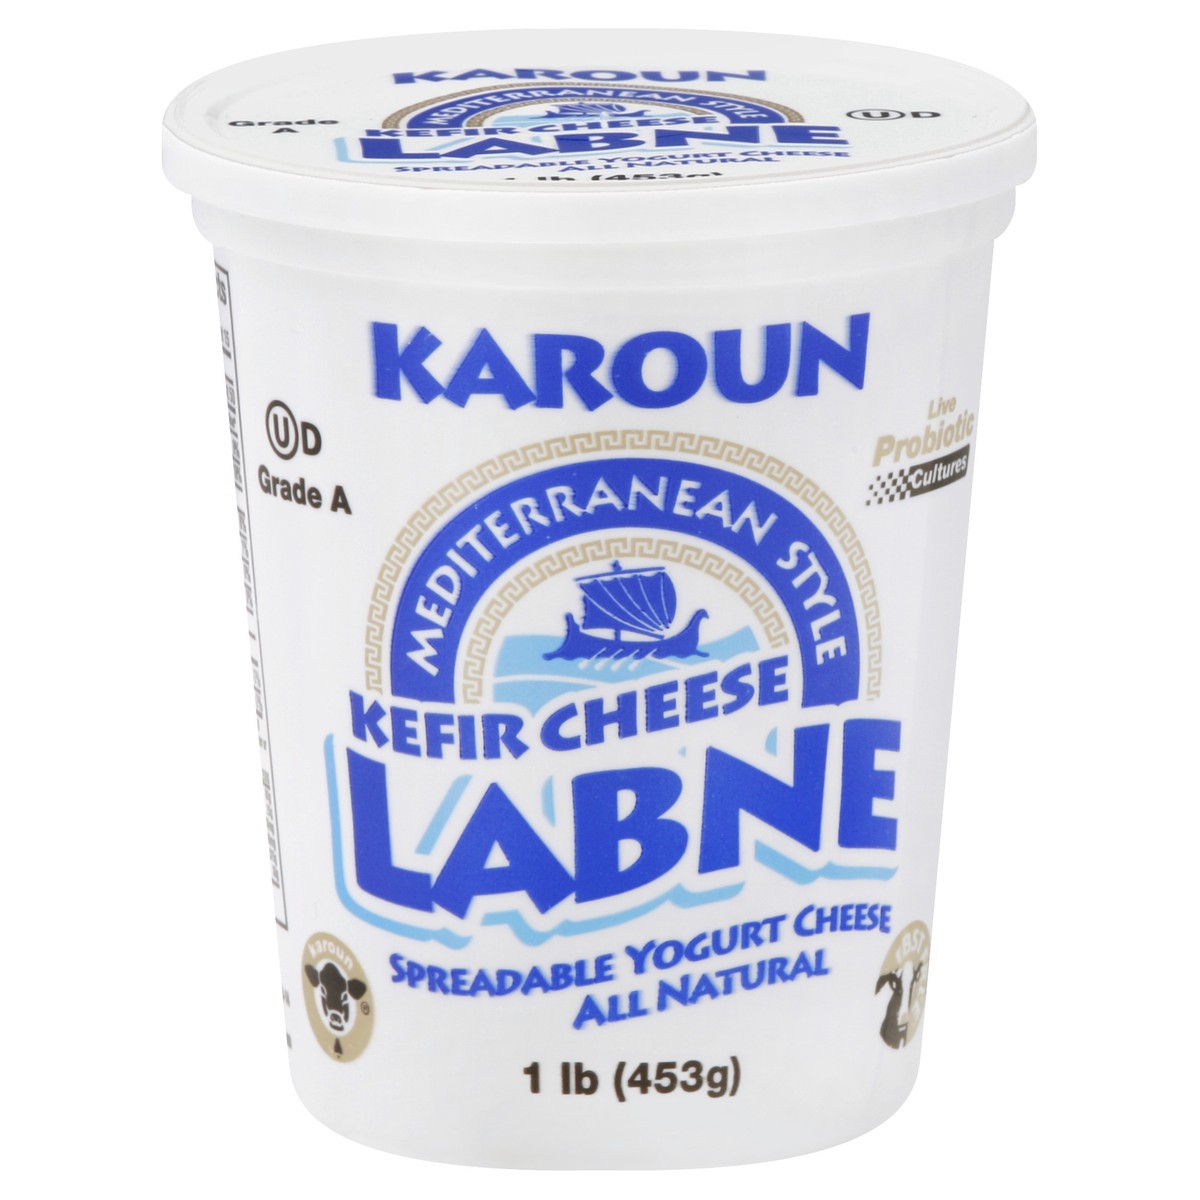 slide 3 of 3, Karoun Mediterranean Kefir Cheese Labne - 16 Oz, 16 oz